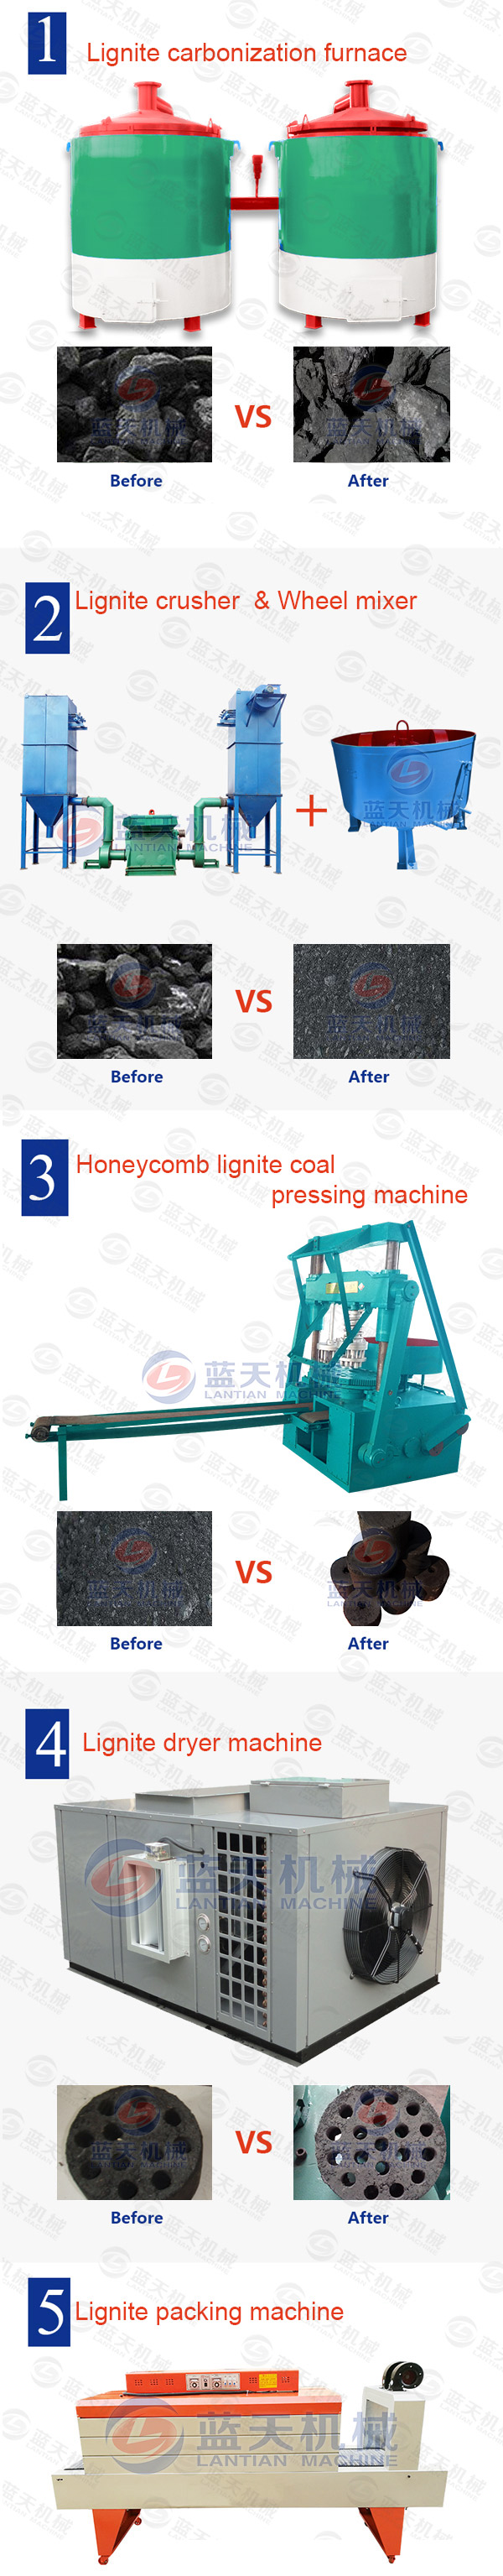 Honeycomb Lignite Coal Pressing Machine